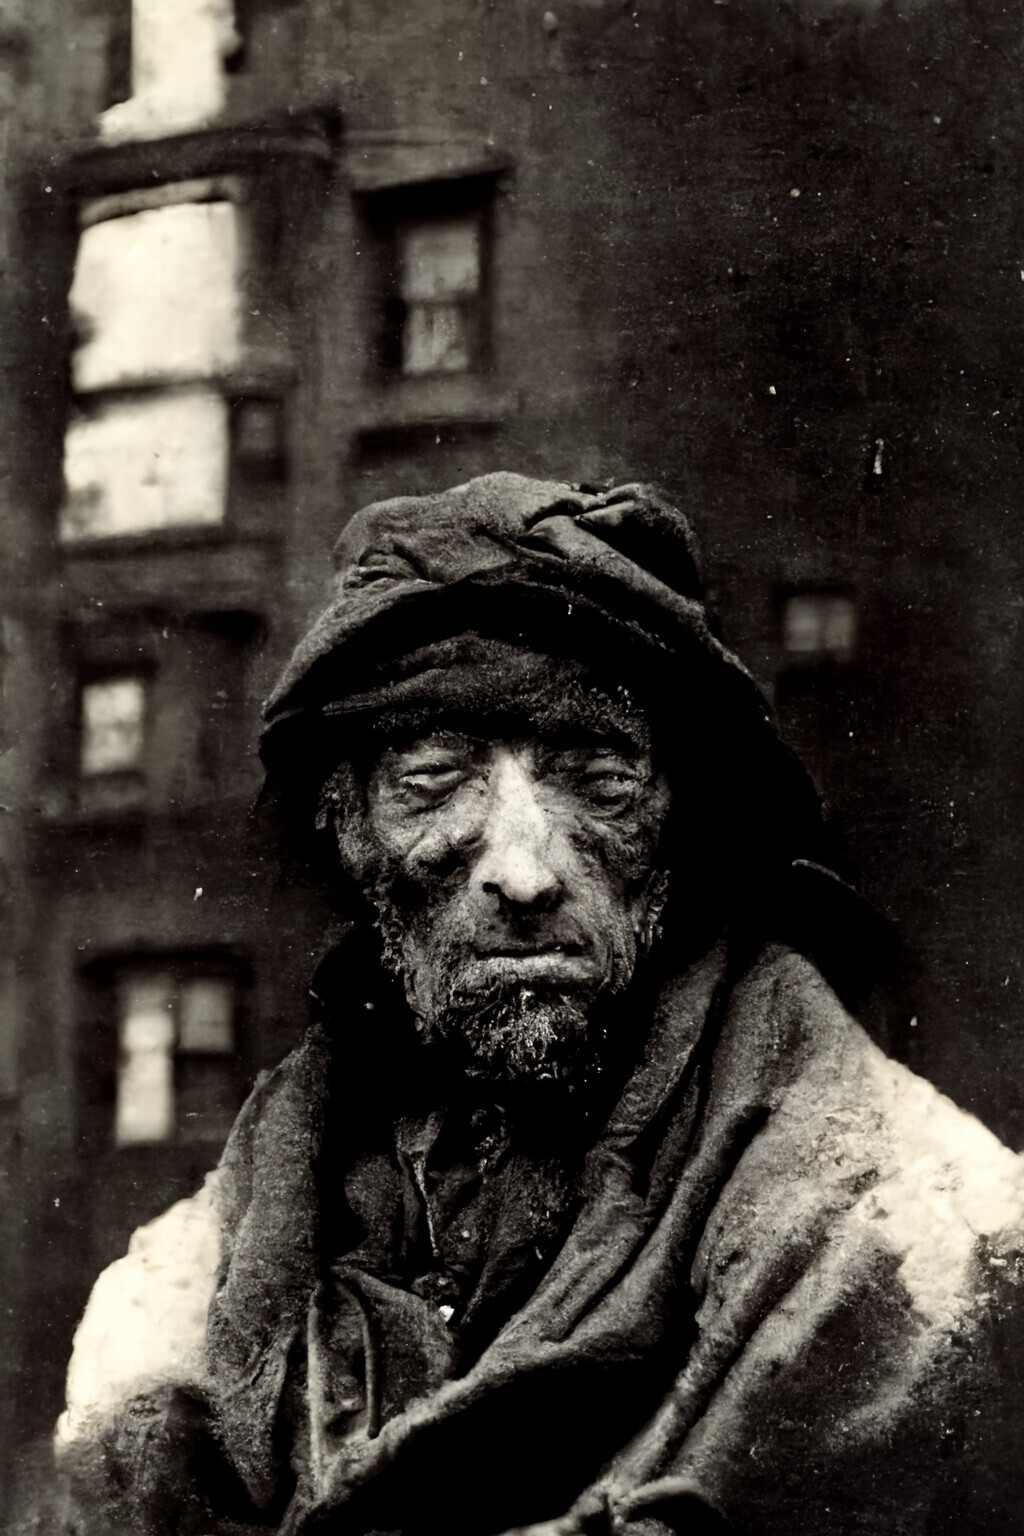 Homeless man
c. 1910
Photograph, ambrotype